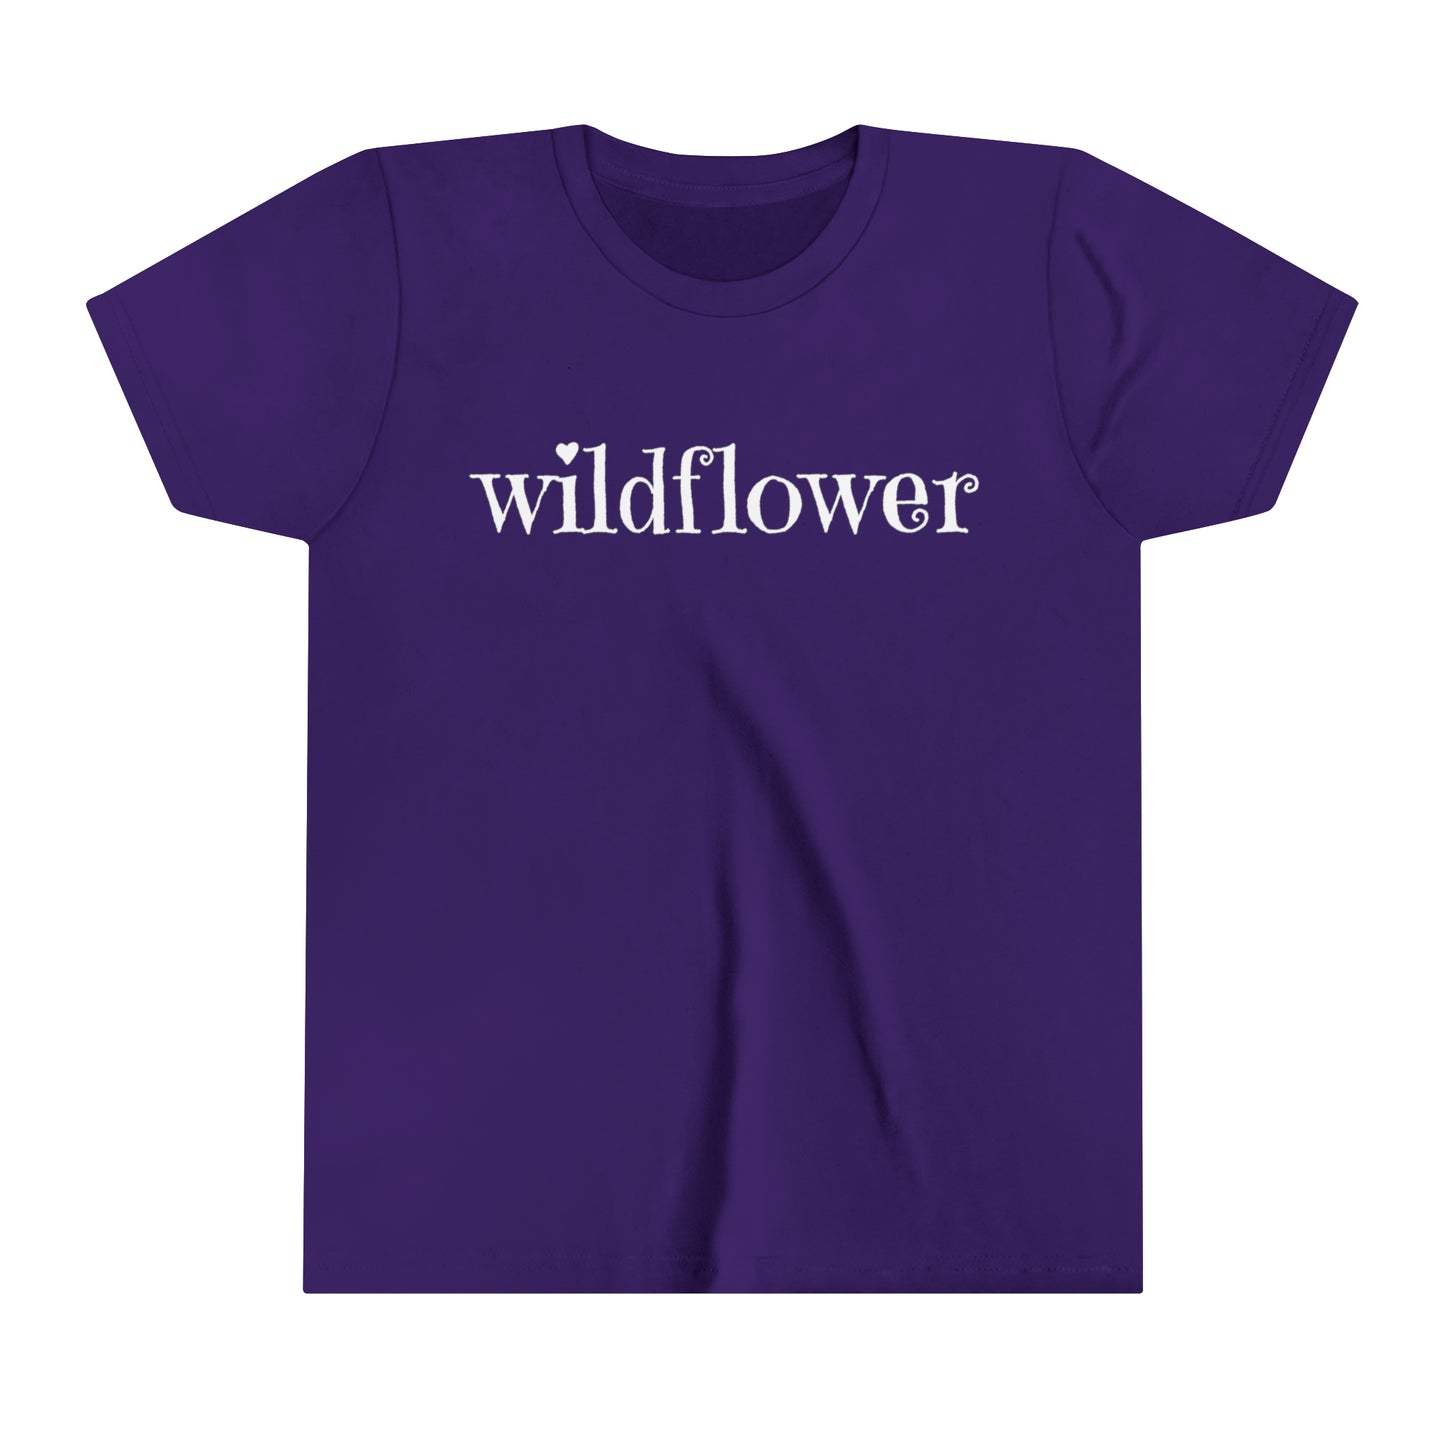 wildflower / youth short sleeve tee